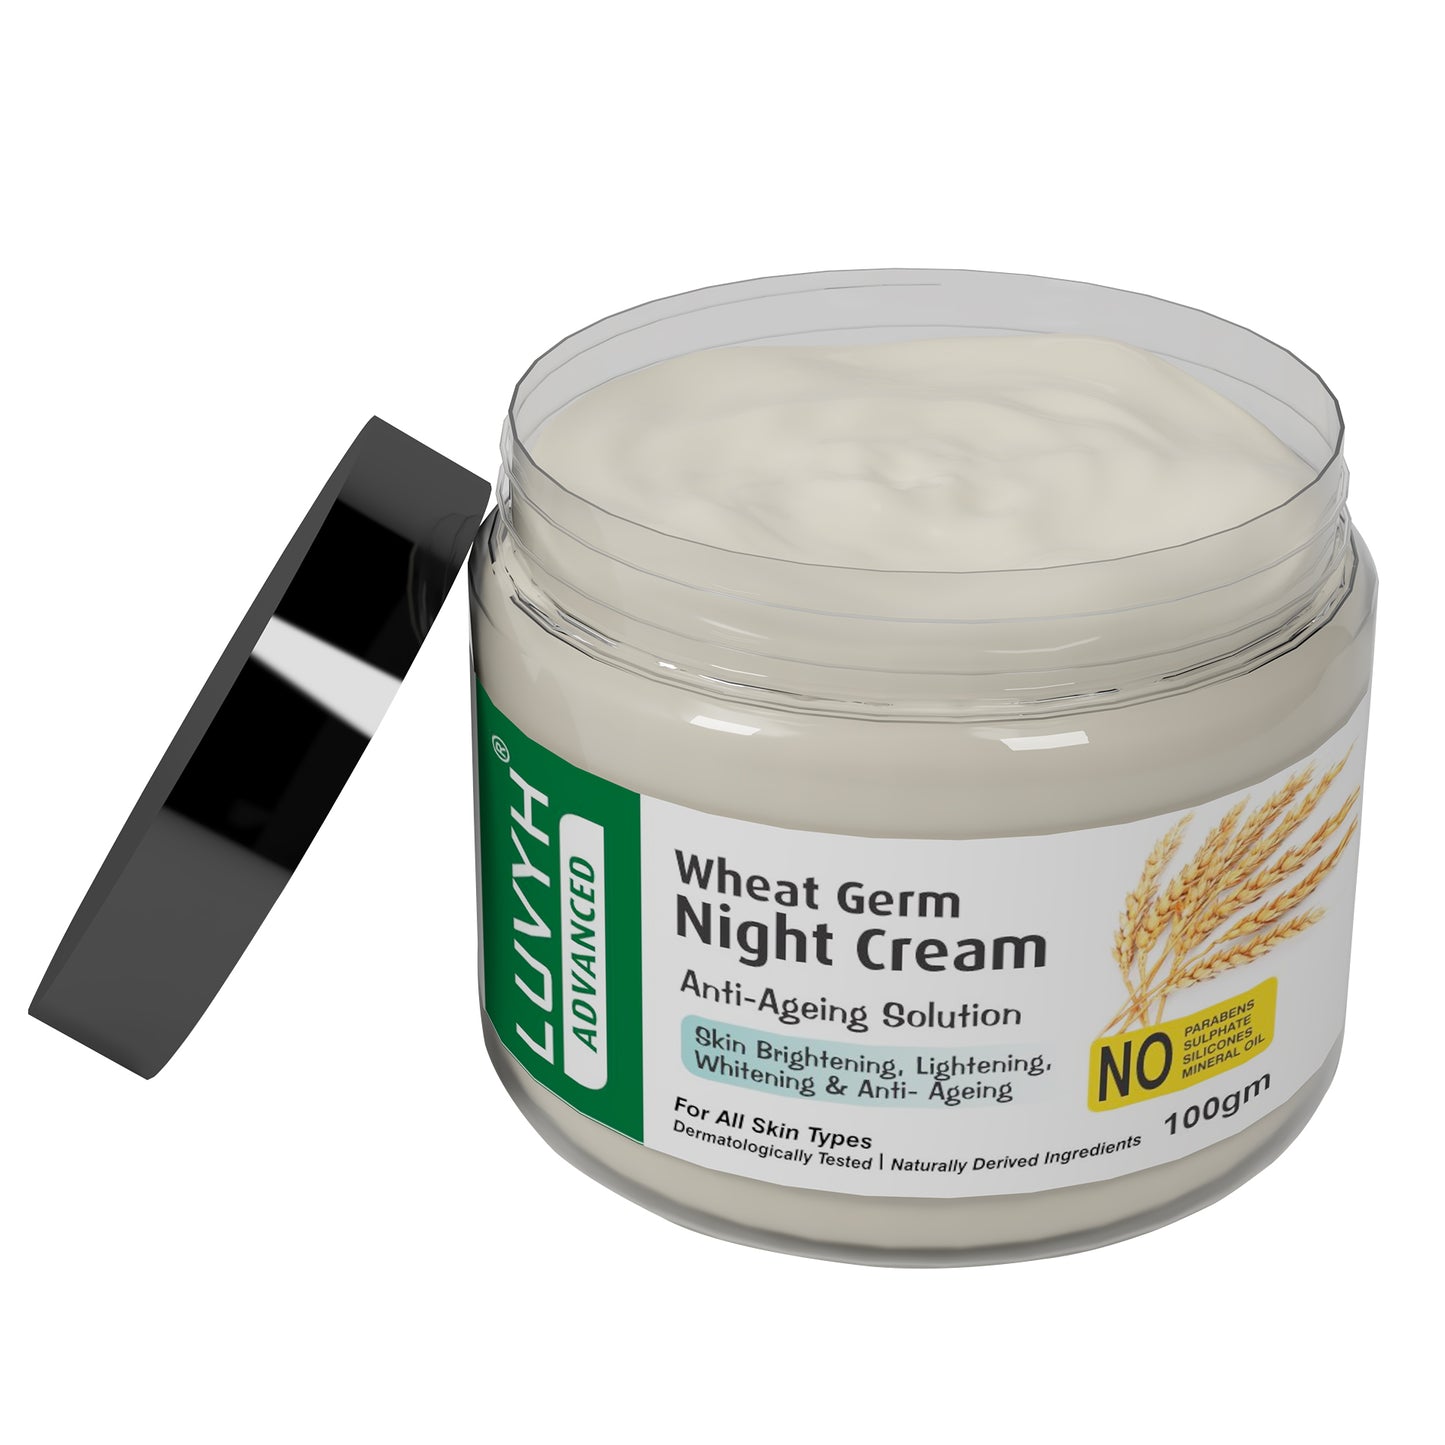 wheat germ night gel for Anti-Ageing